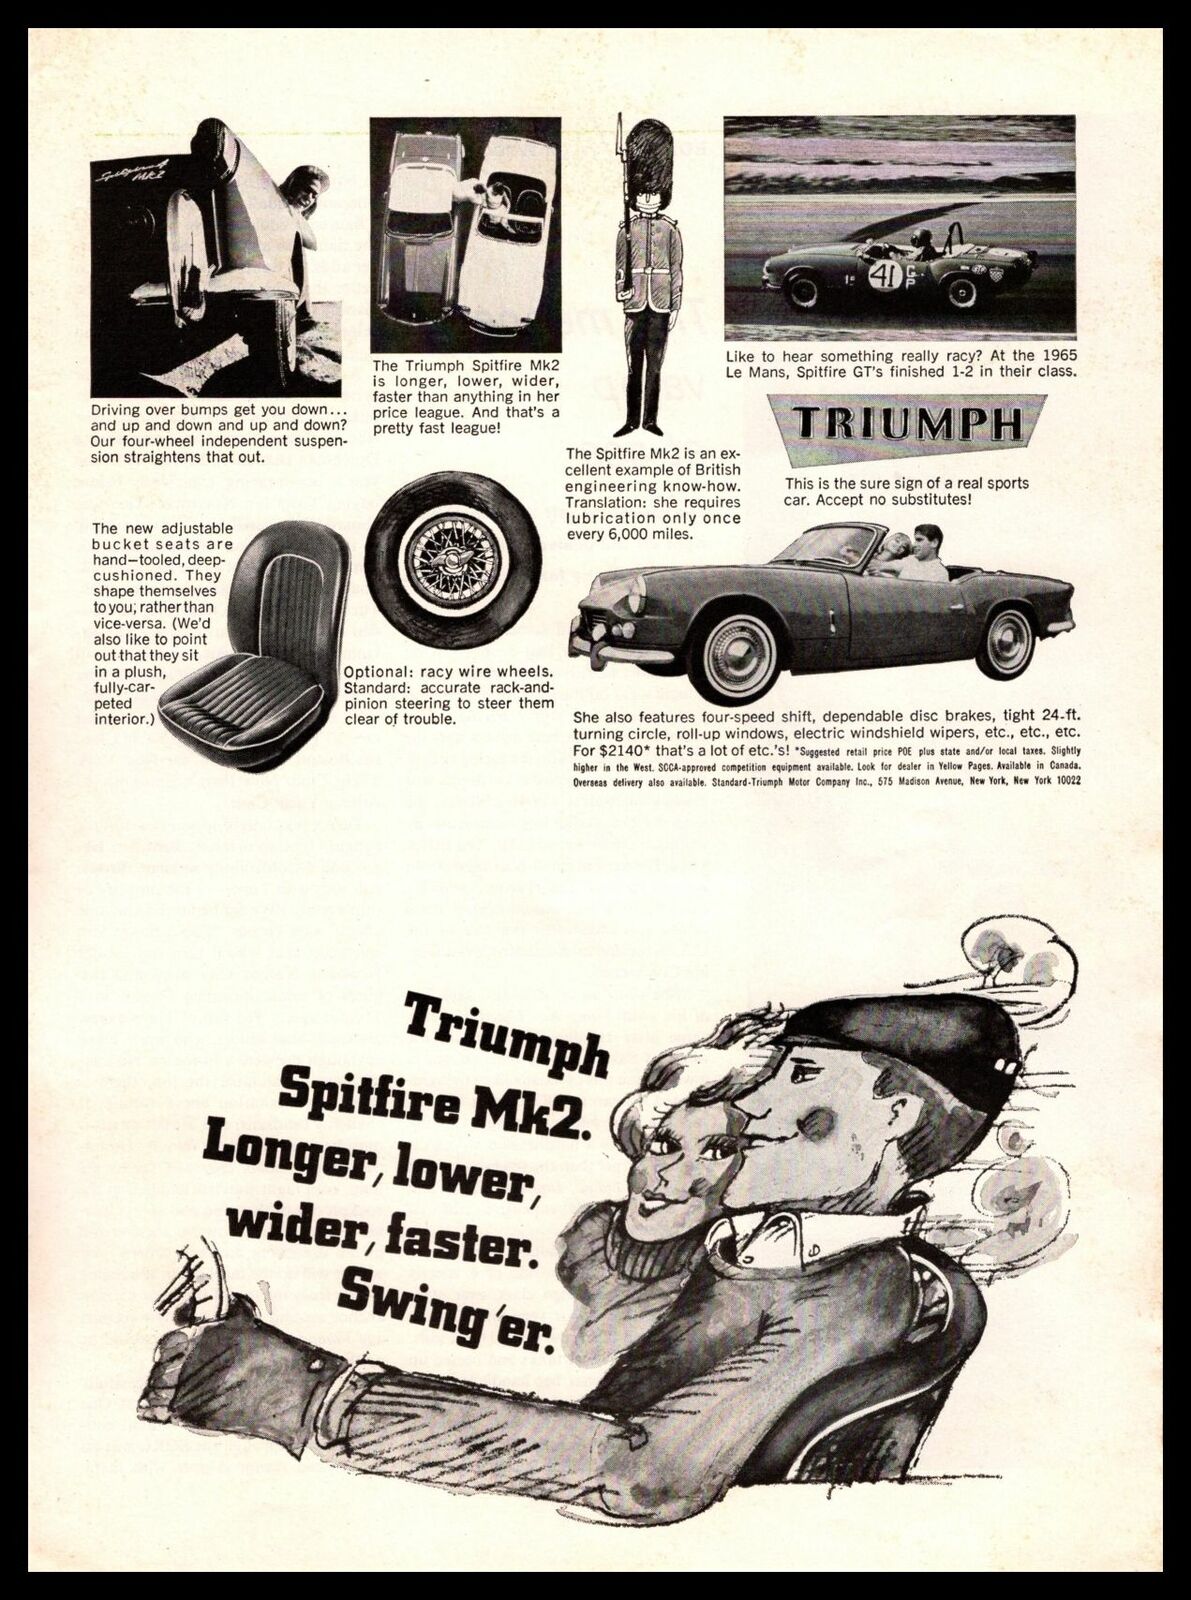 1966 Triumph Spitfire Mk2 $2155 1965 Le Mans Winner Spitfire Gt Vintage Print Ad